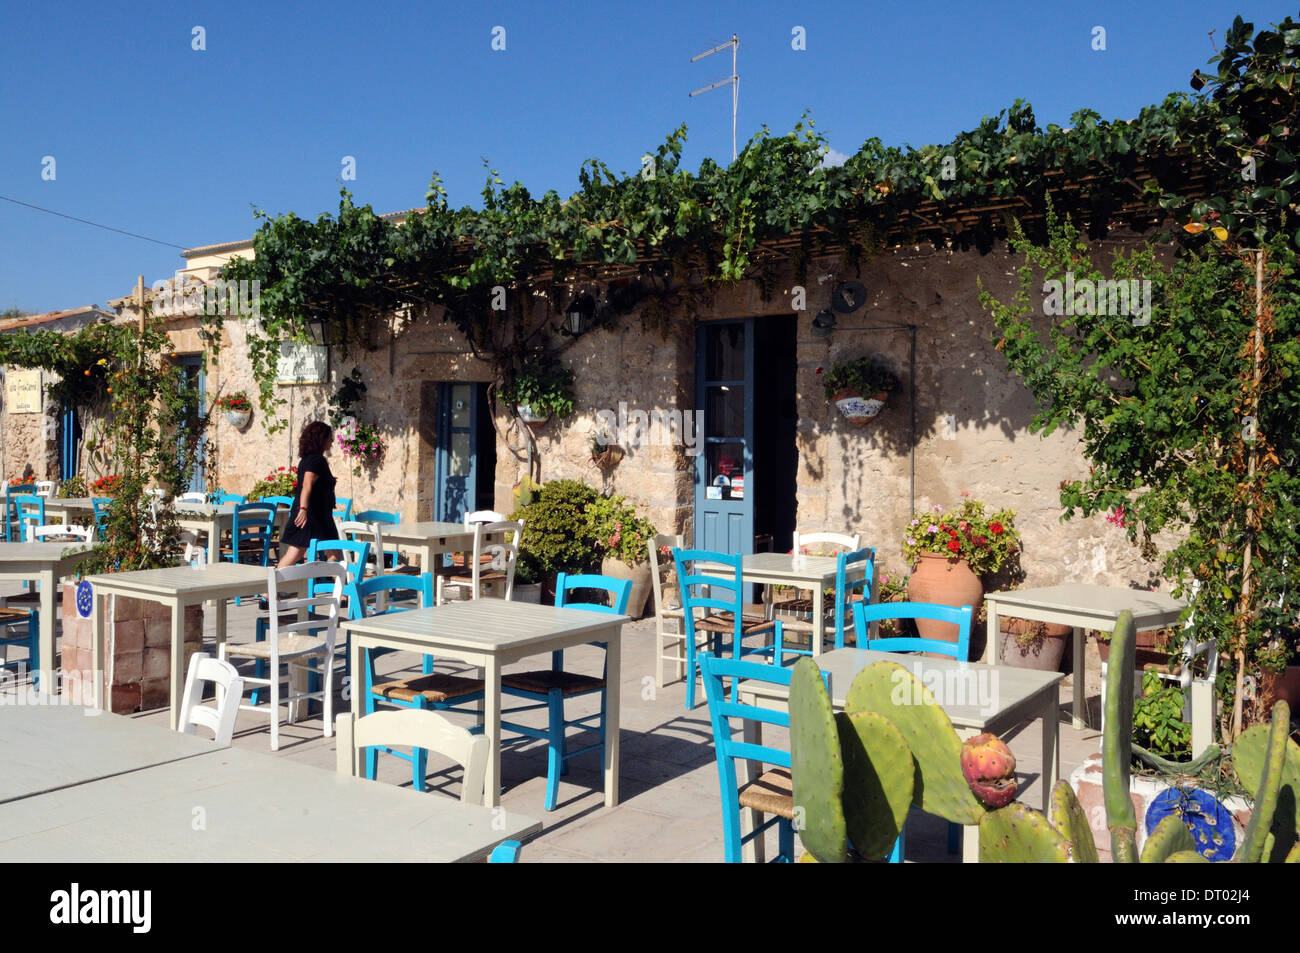 View on the la Cialoma Restaurant, old seaside villageof Marzamemi, Sicily Stock Photo